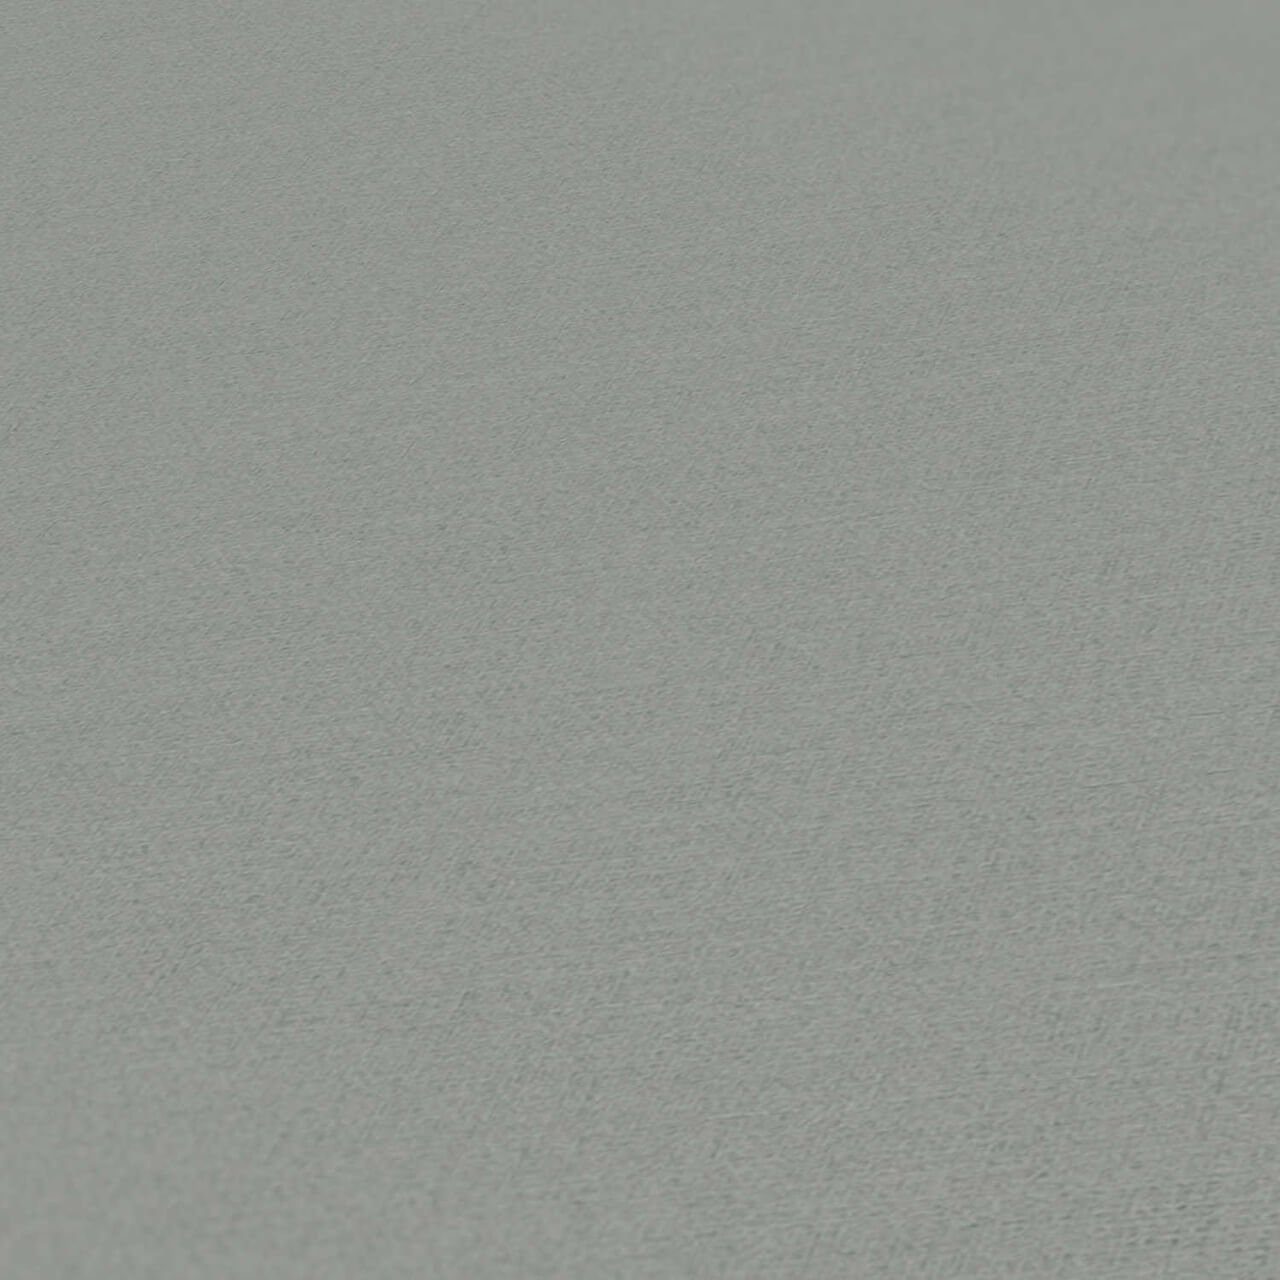 KUNSTLOFT Vliestapete Ethereal Embrace 0.53x10.05 Design m, lichtbeständige grau Tapete matt